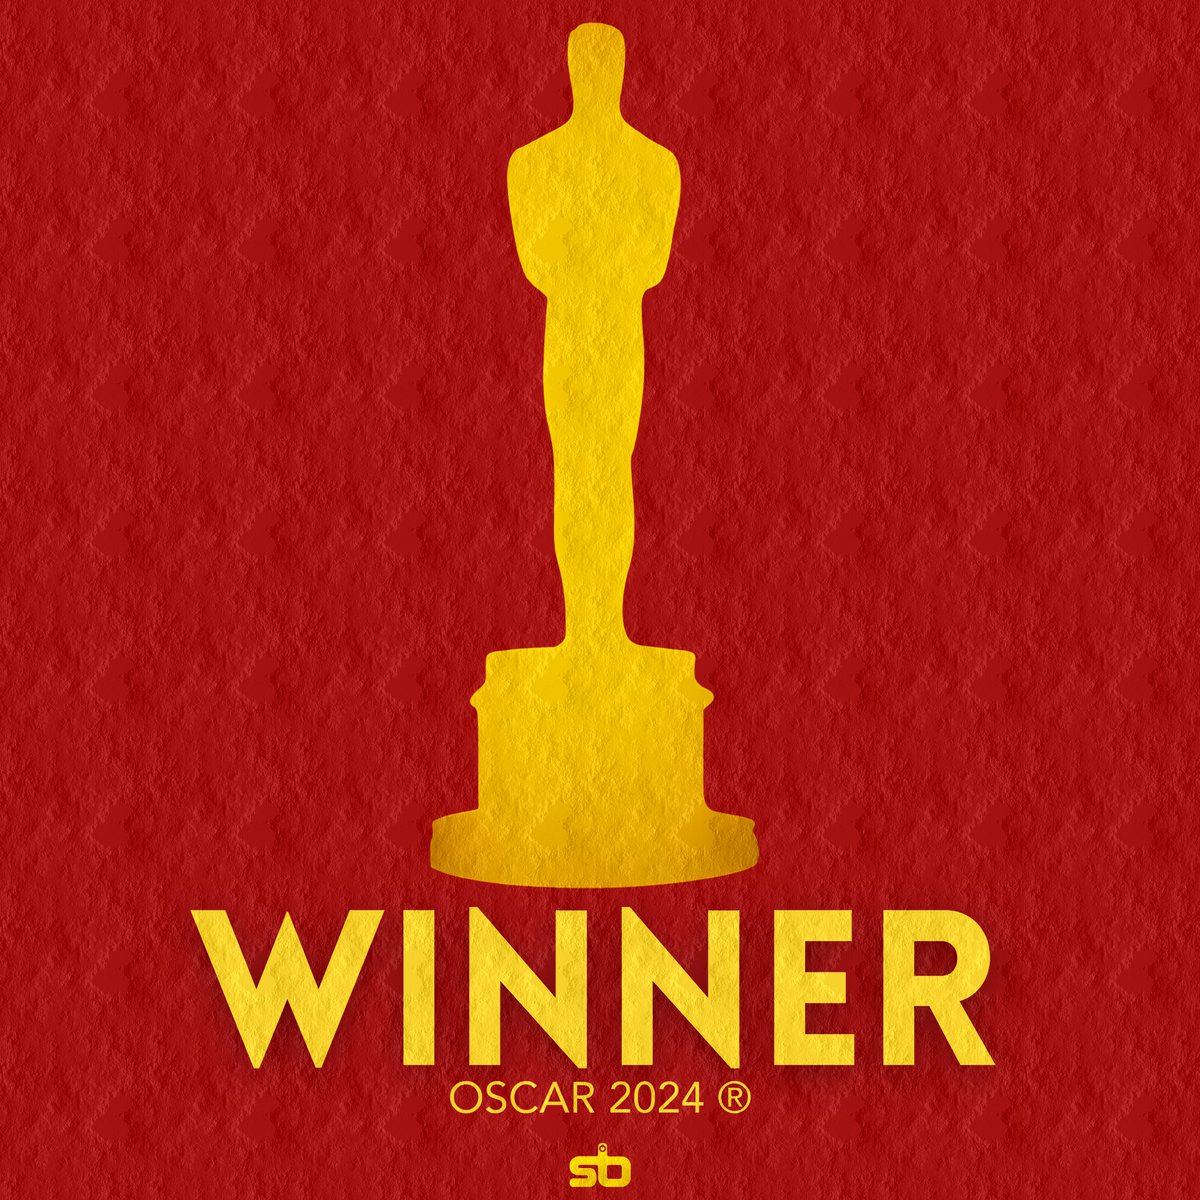 🏆 CILLIAN MURPHY vence o Oscar de “Melhor Ator” por Oppenheimer. #Oscars #Oscars2024